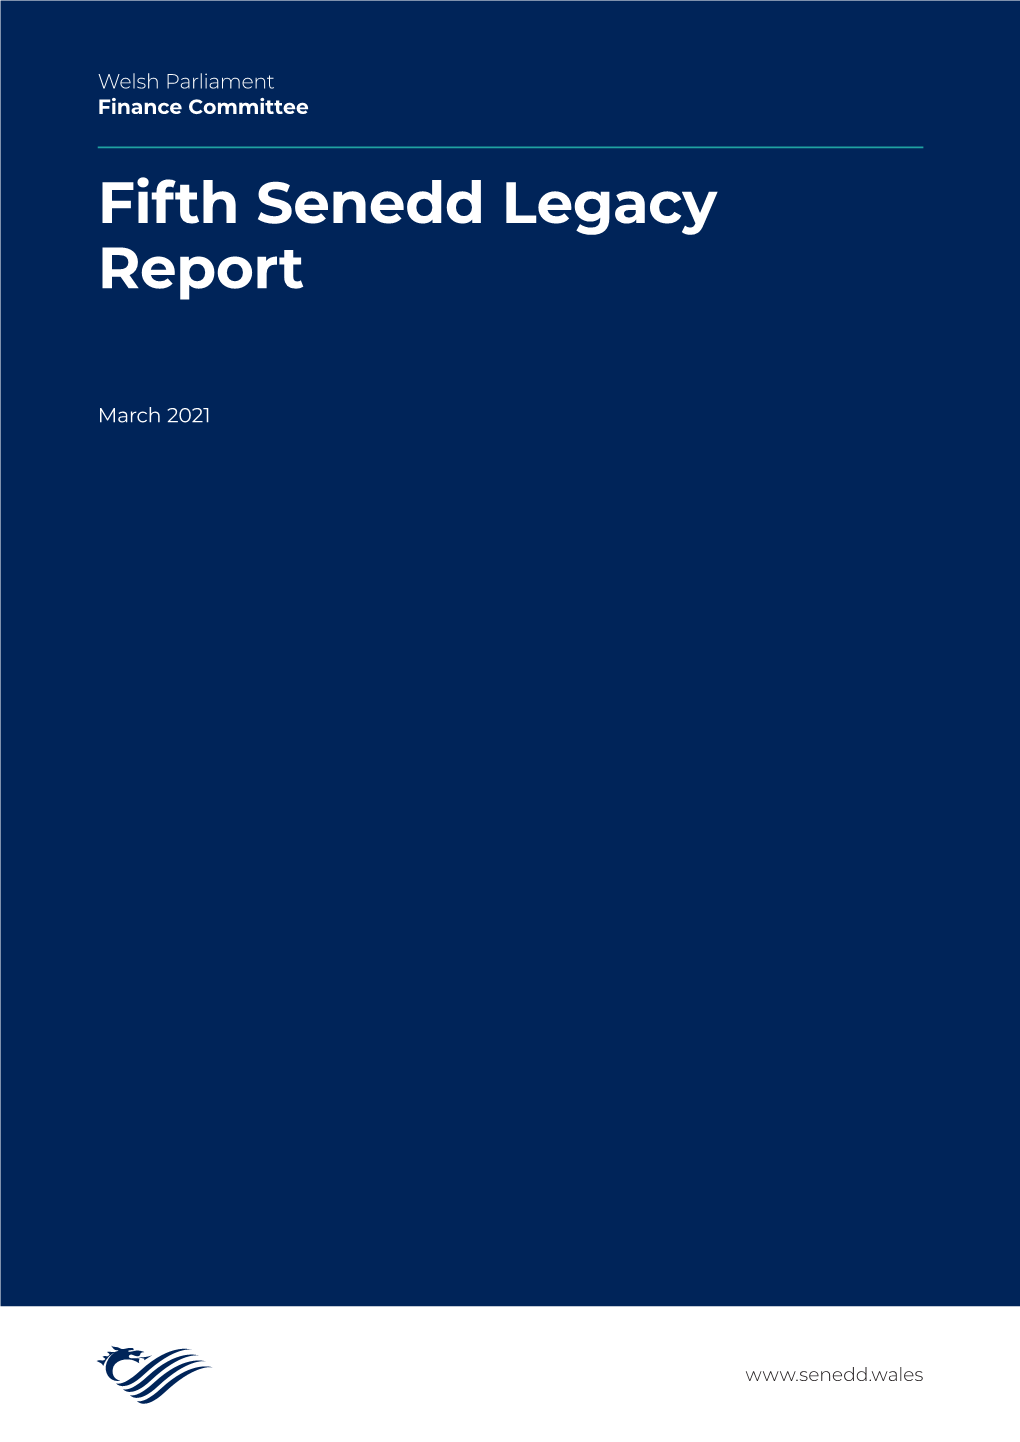 Finance Committee Report – Fifth Senedd Legacy Report